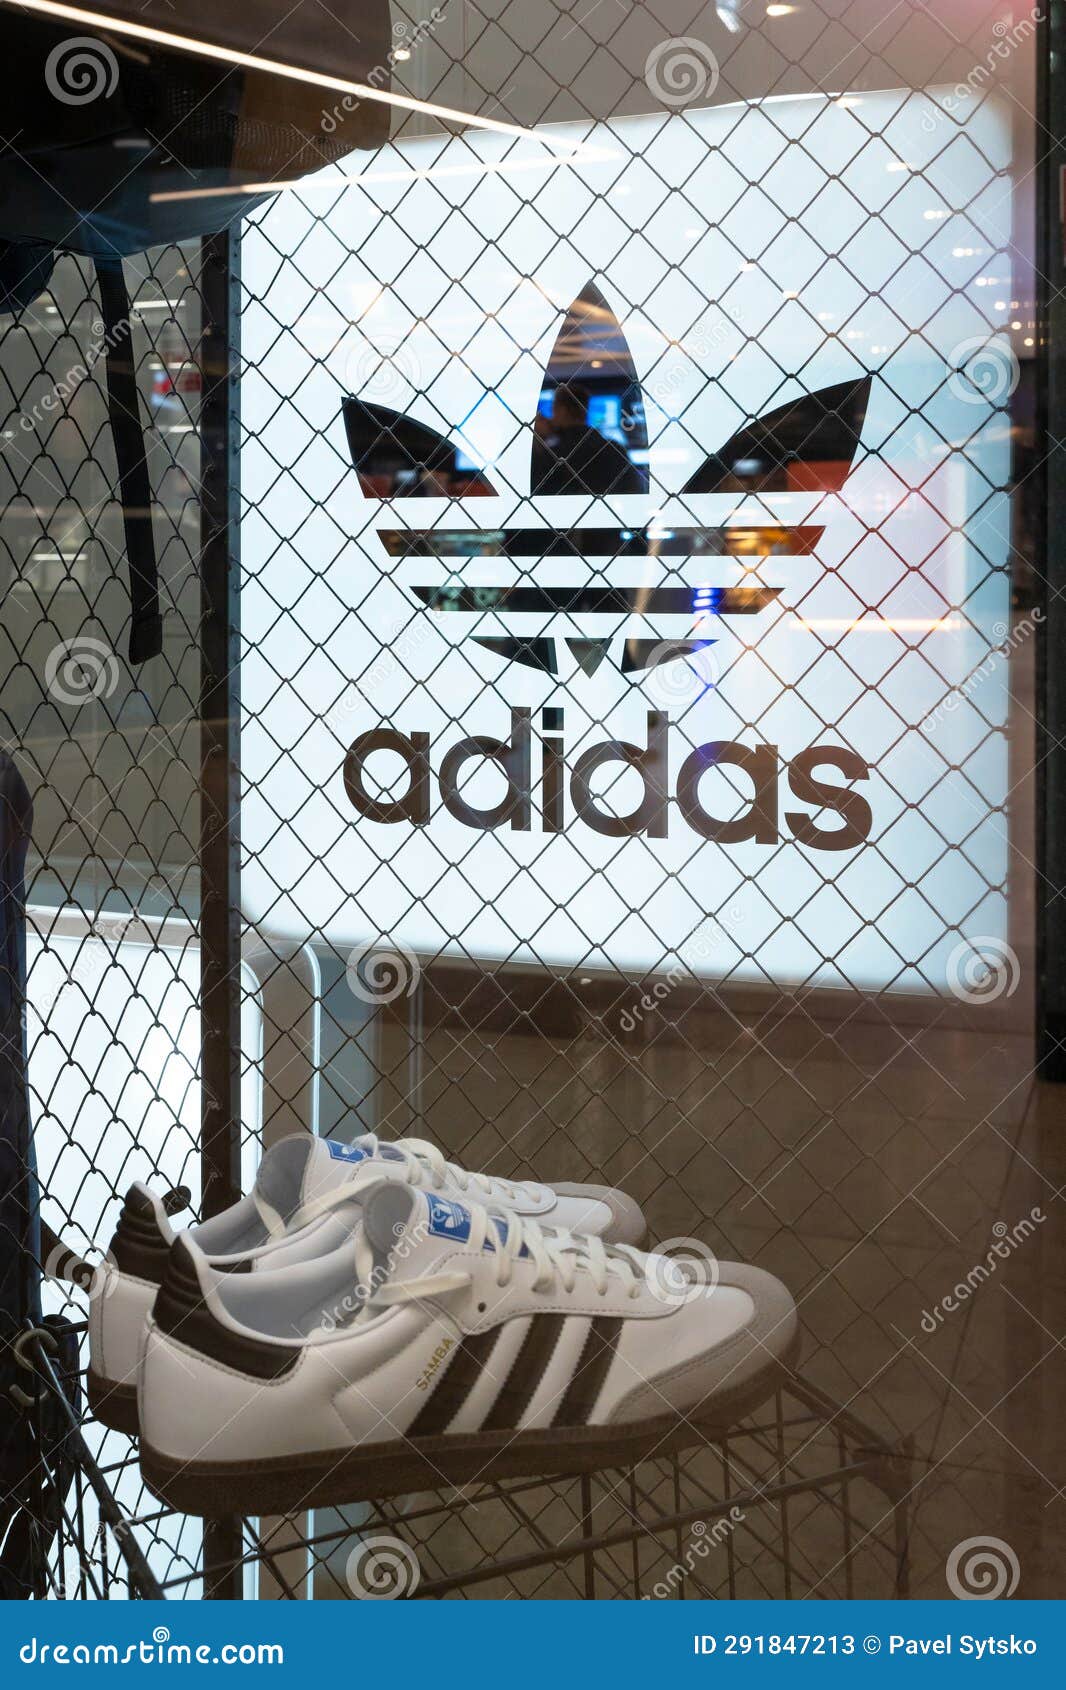 adidas brand advertising sign sneakers interior shoe store minsk belarus september neon shop window 291847213